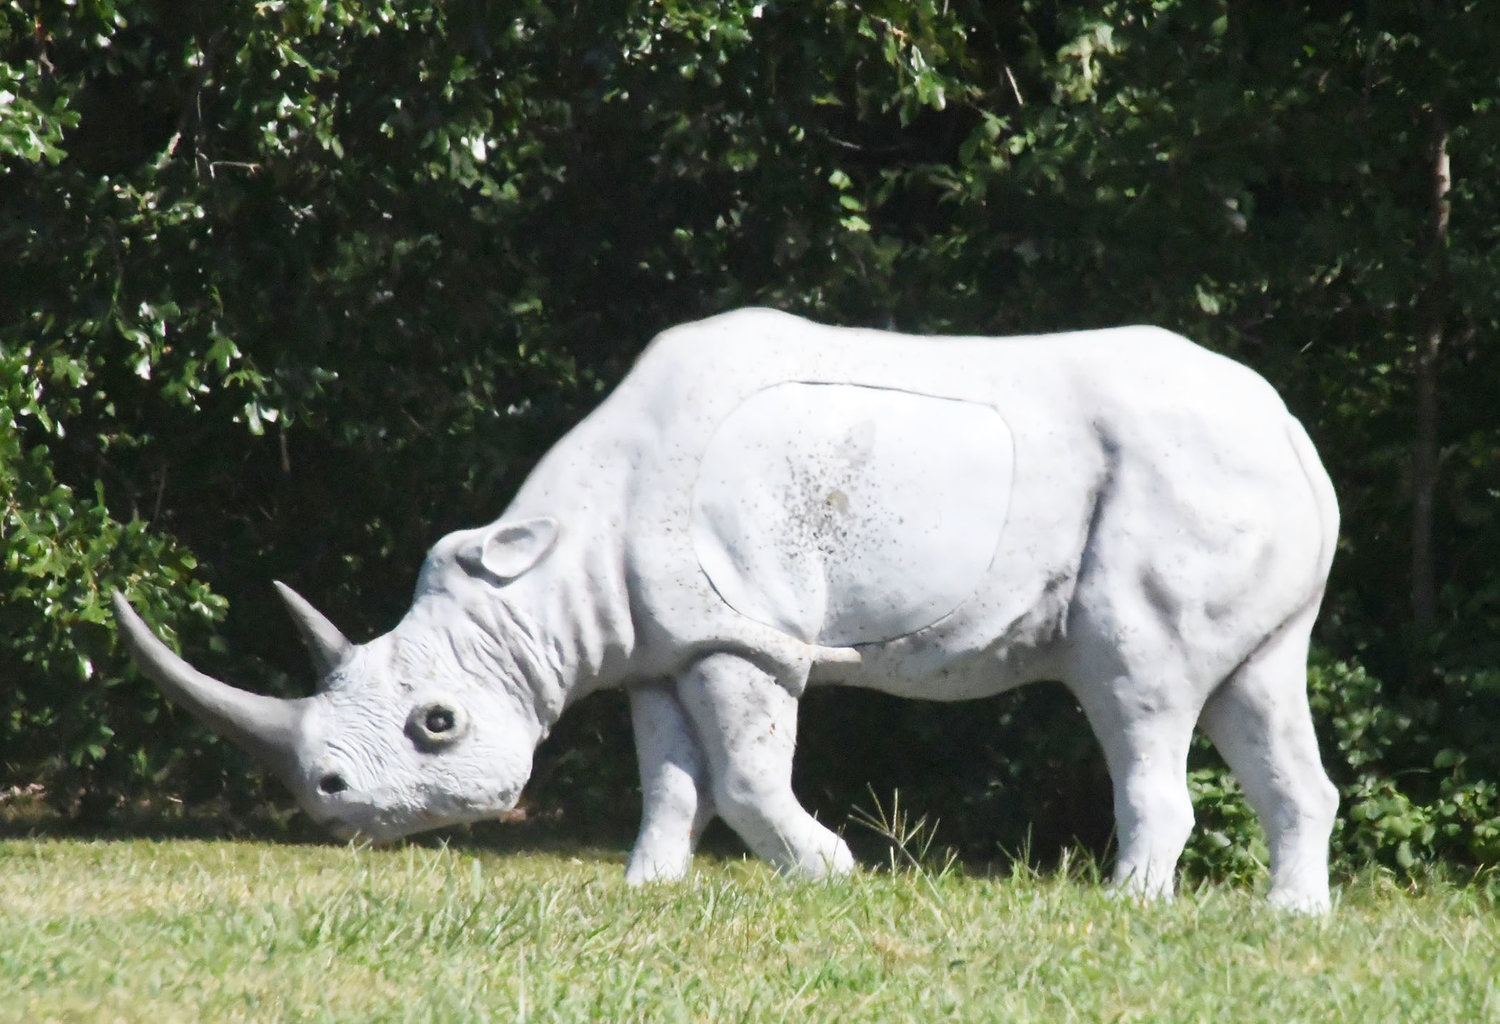 This rhinoceros was a target on the Safari Range inside Rothwell Park.